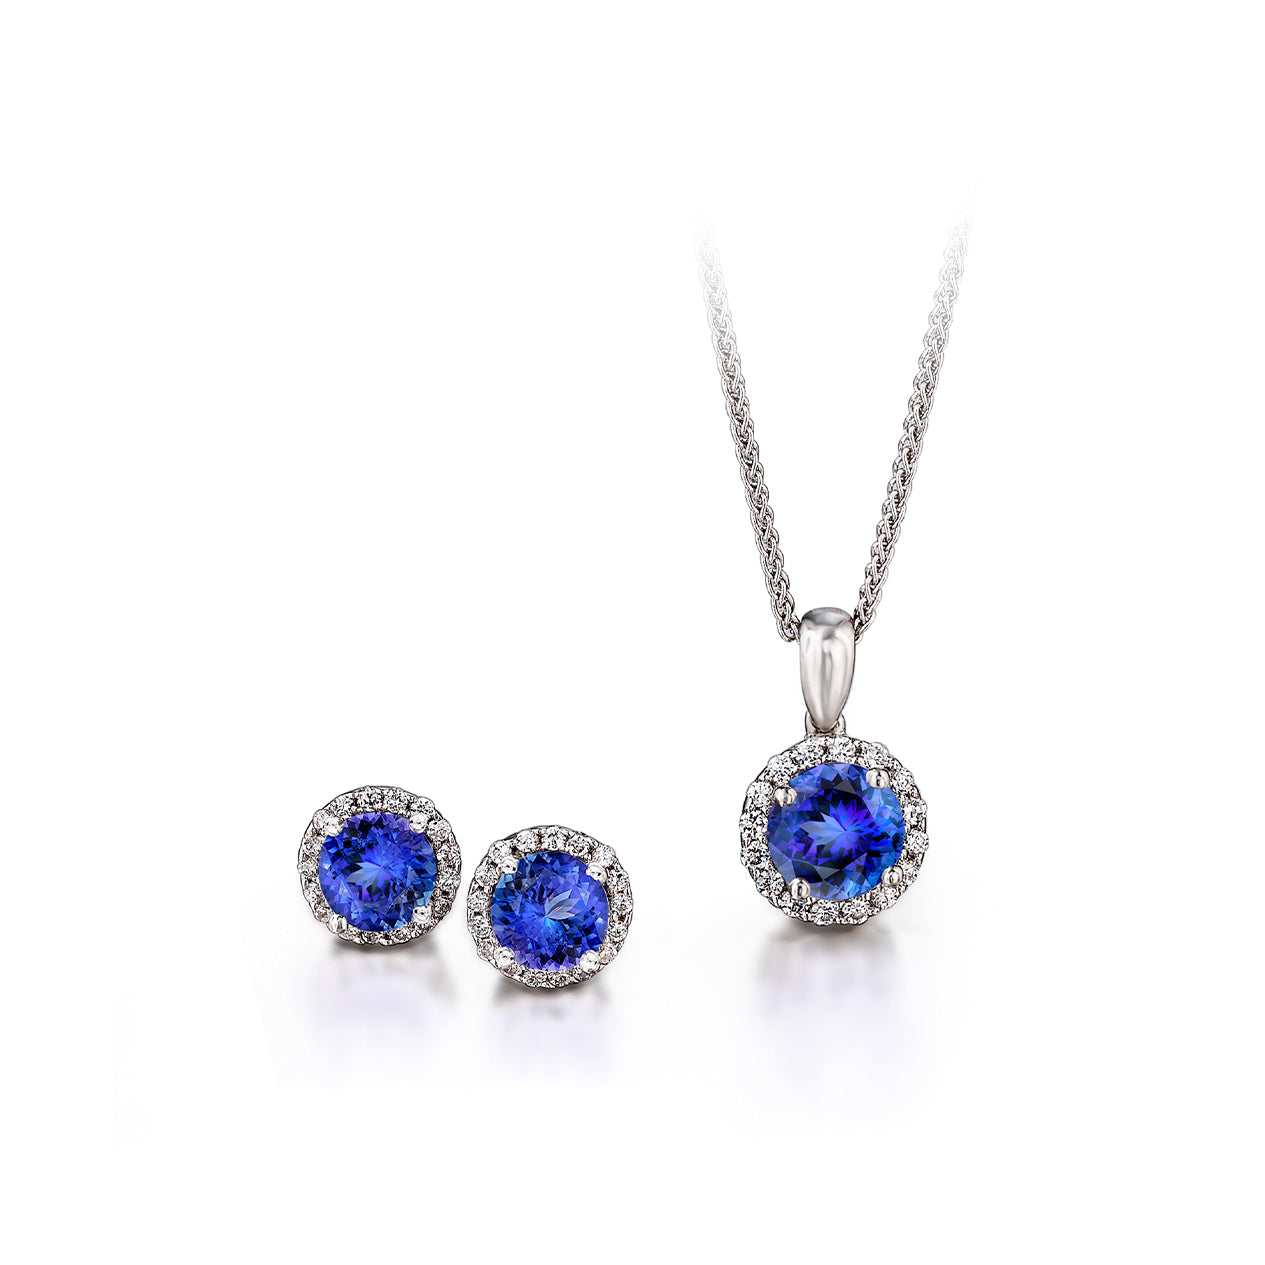 Shimansky Tanzanite and diamond jewellery set with earrings and pendant